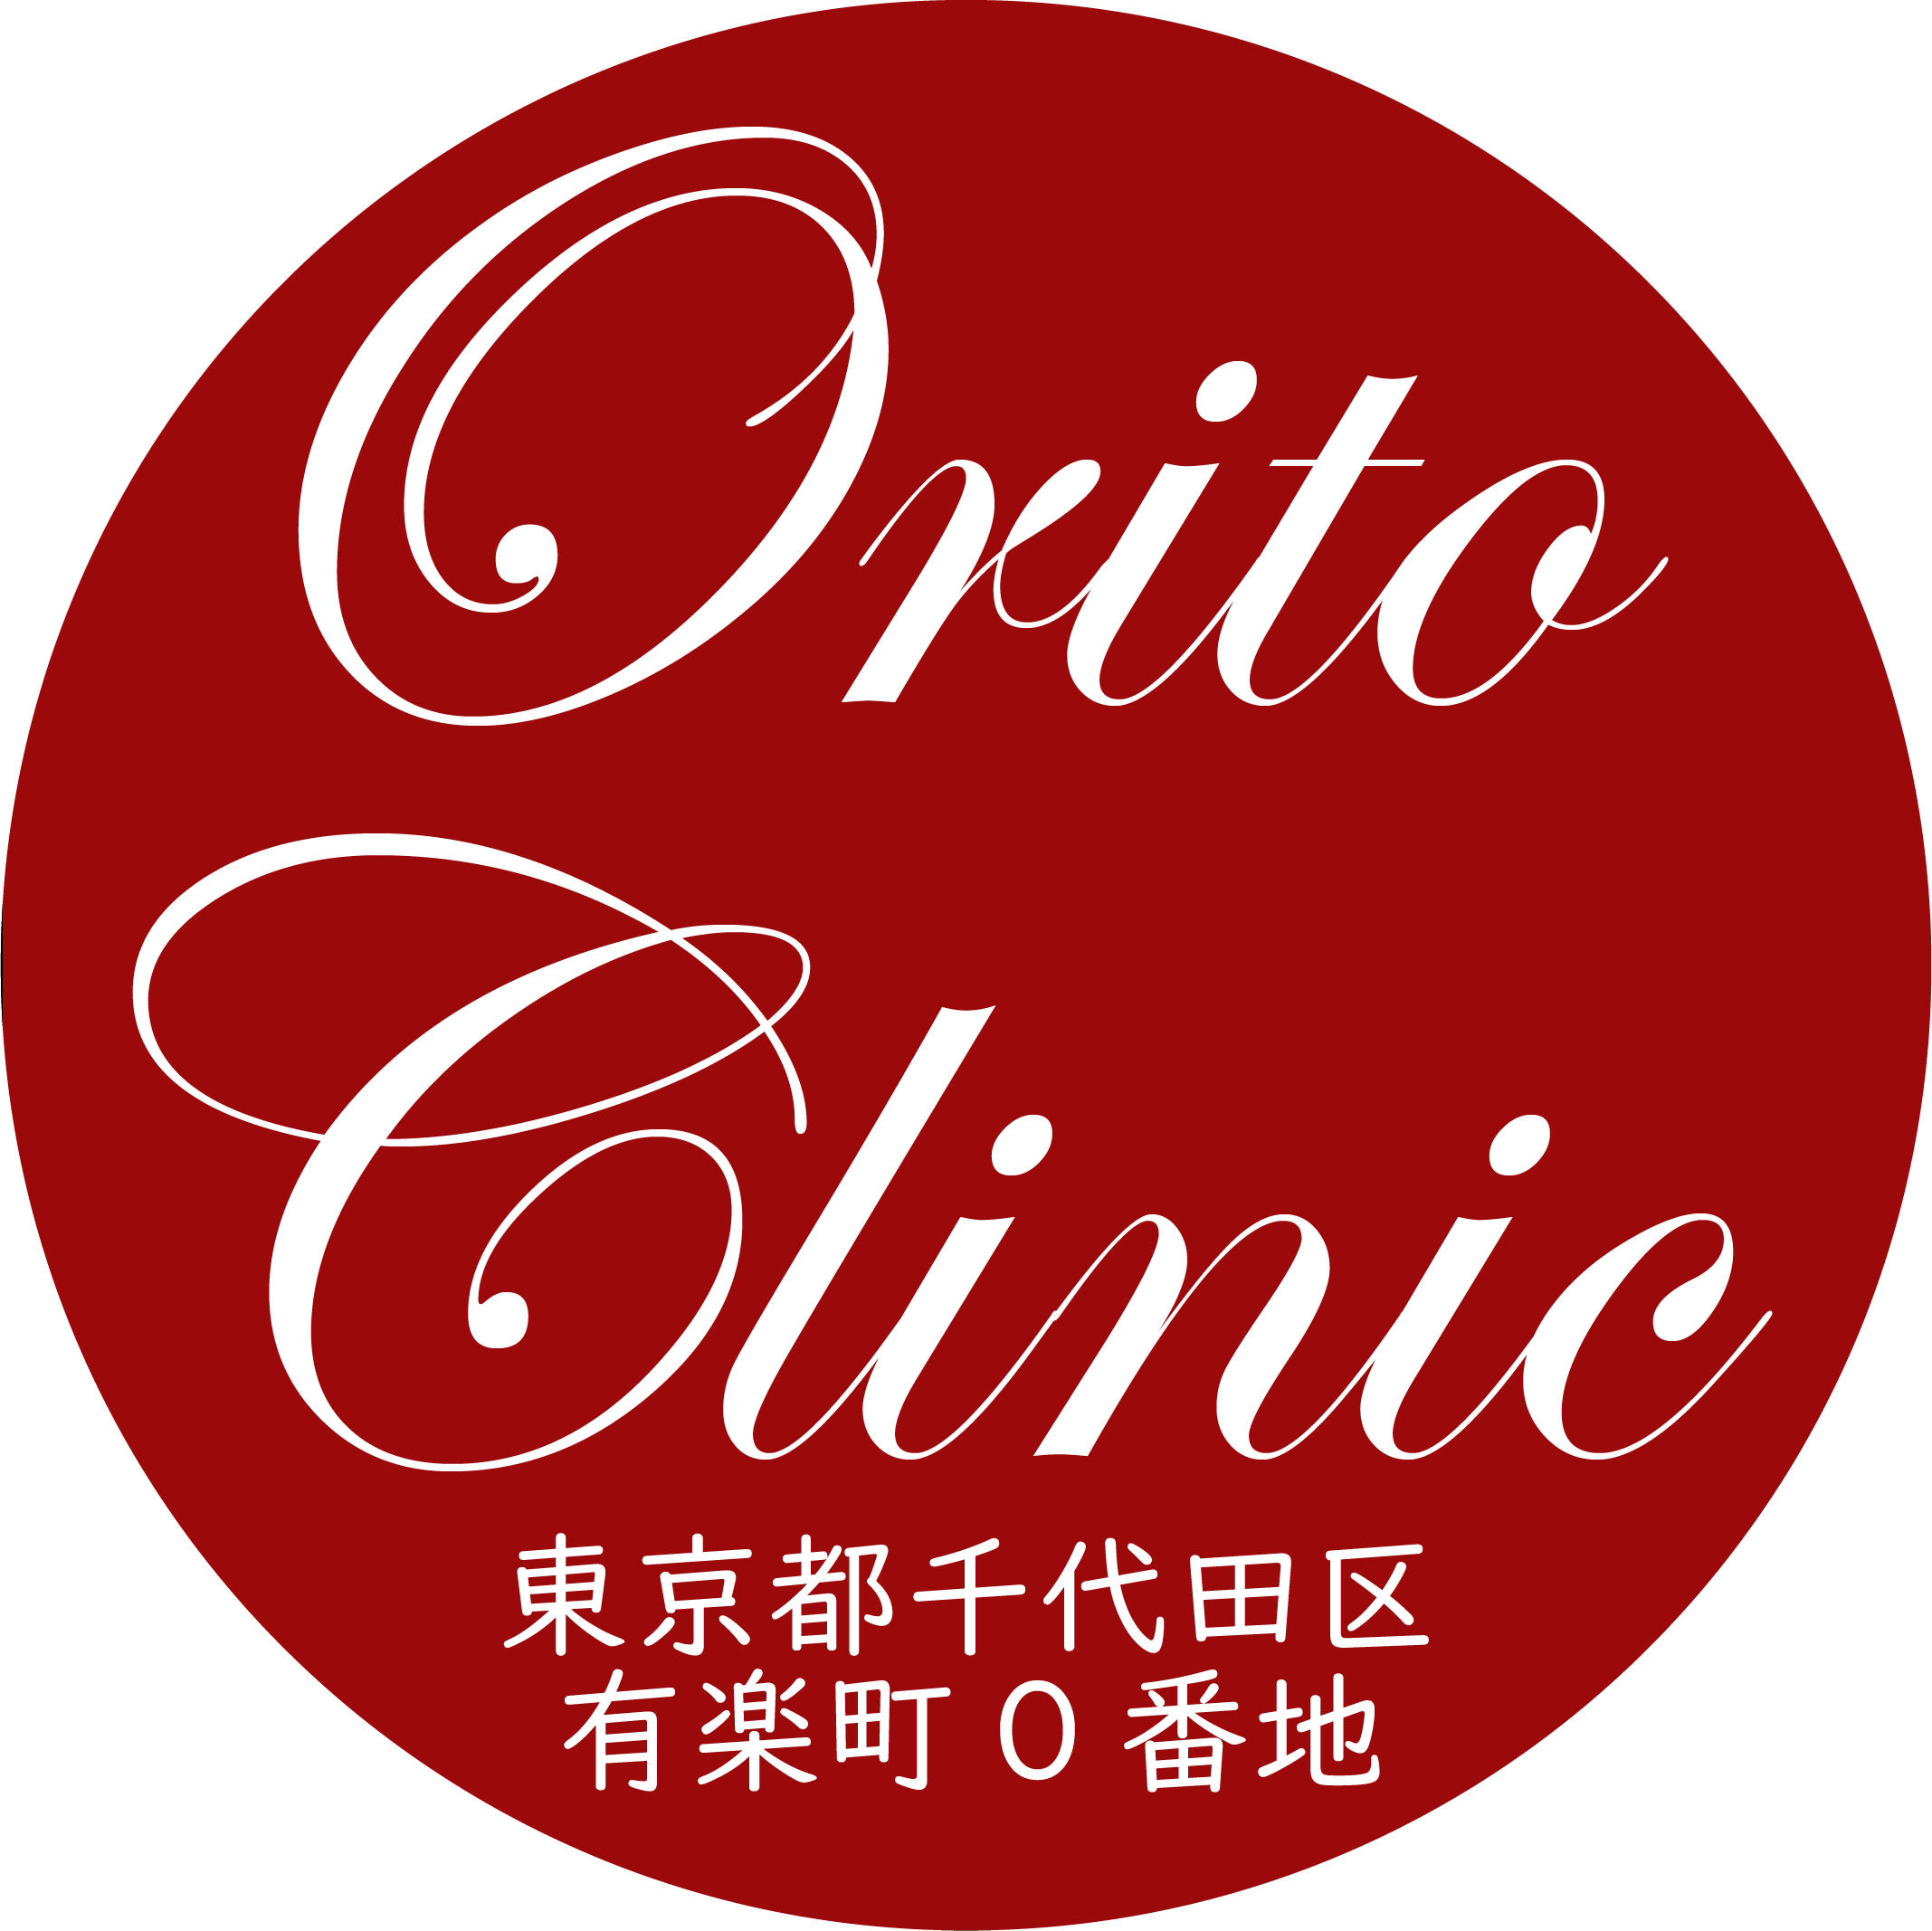 orito clinic logo